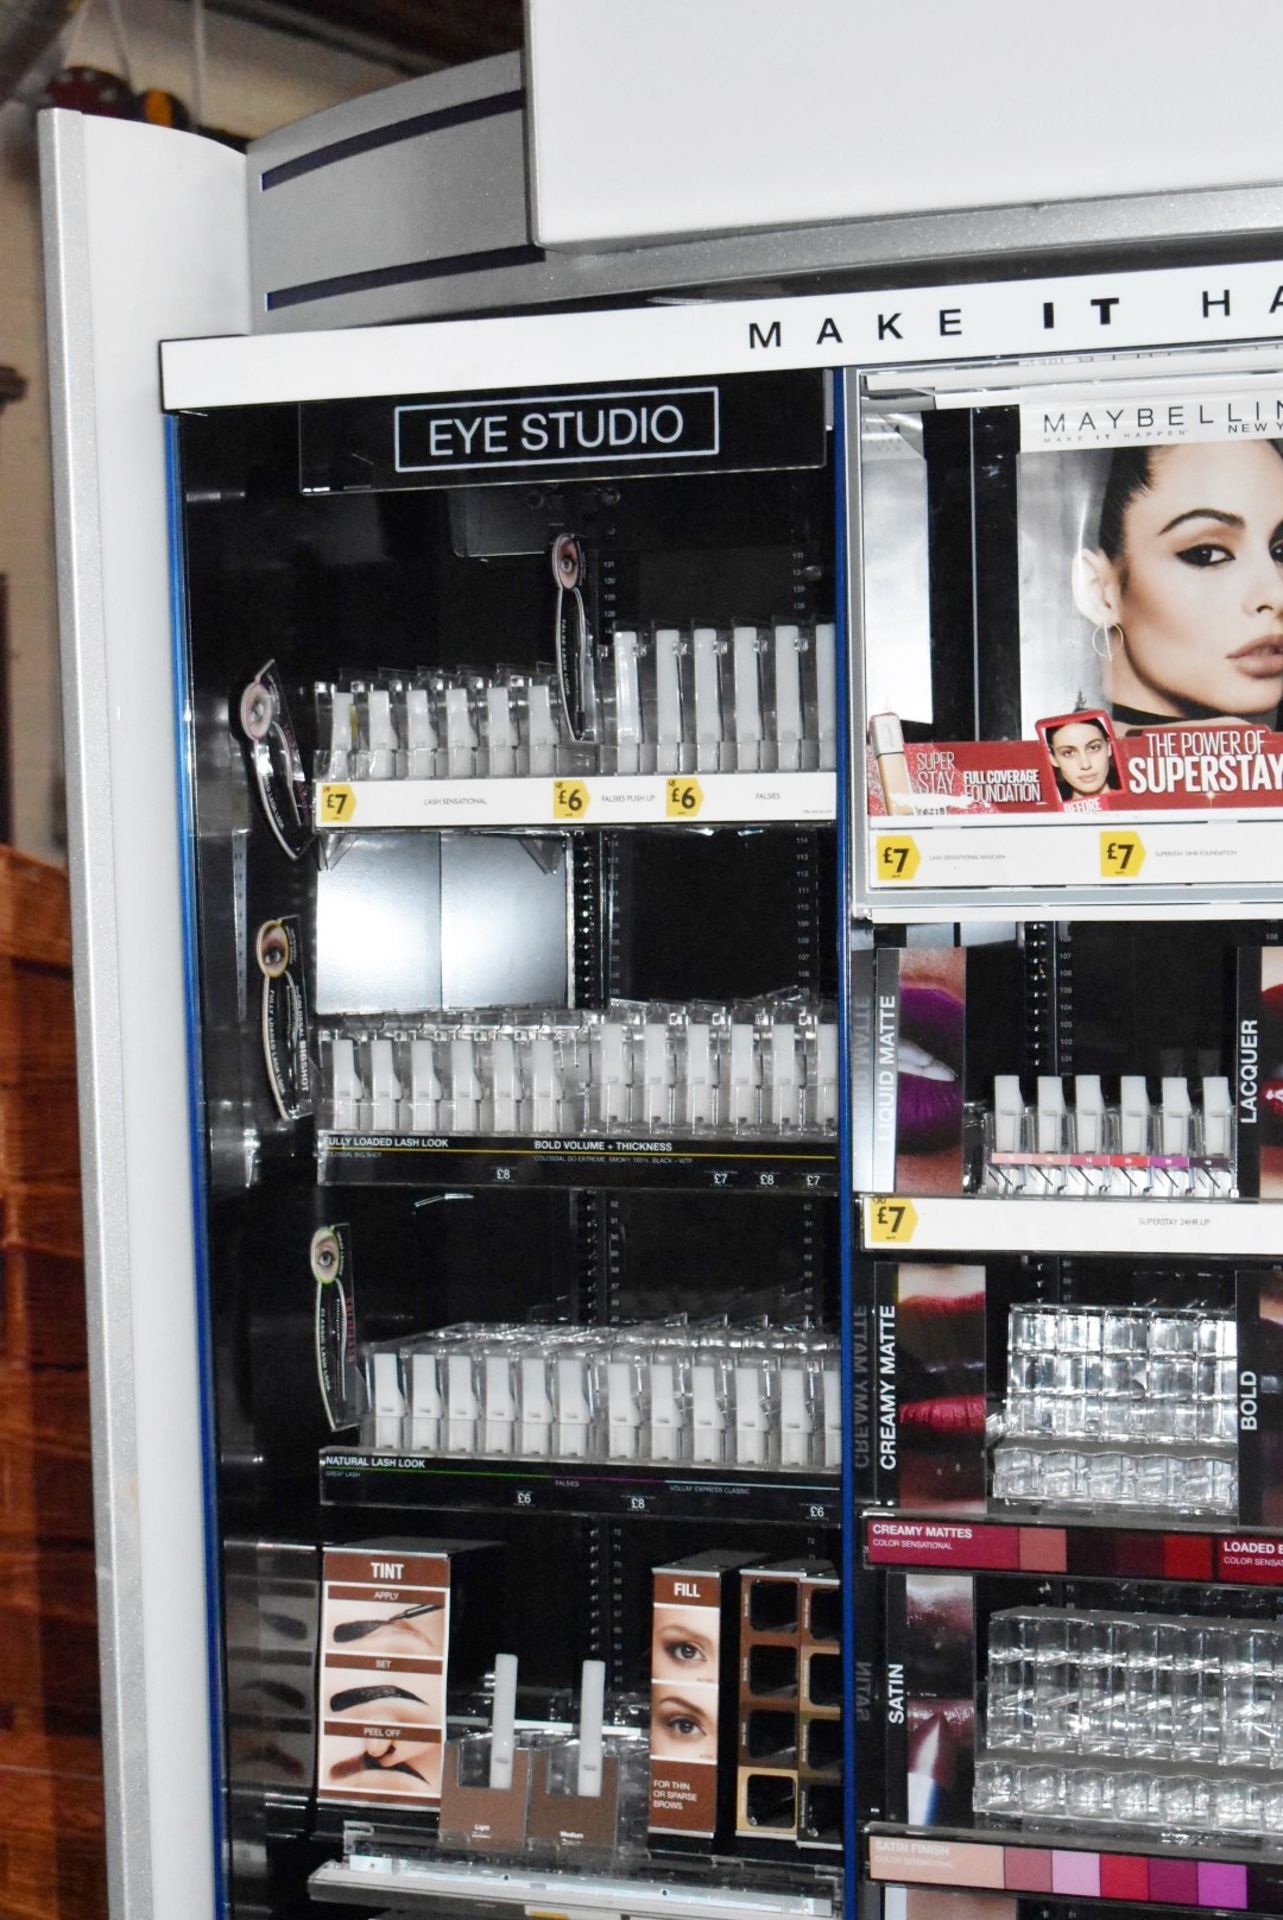 1 x Large Freestanding Make Up & Beauty Illuminated Retail Display Unit - Make it Happen Eye and - Image 10 of 16